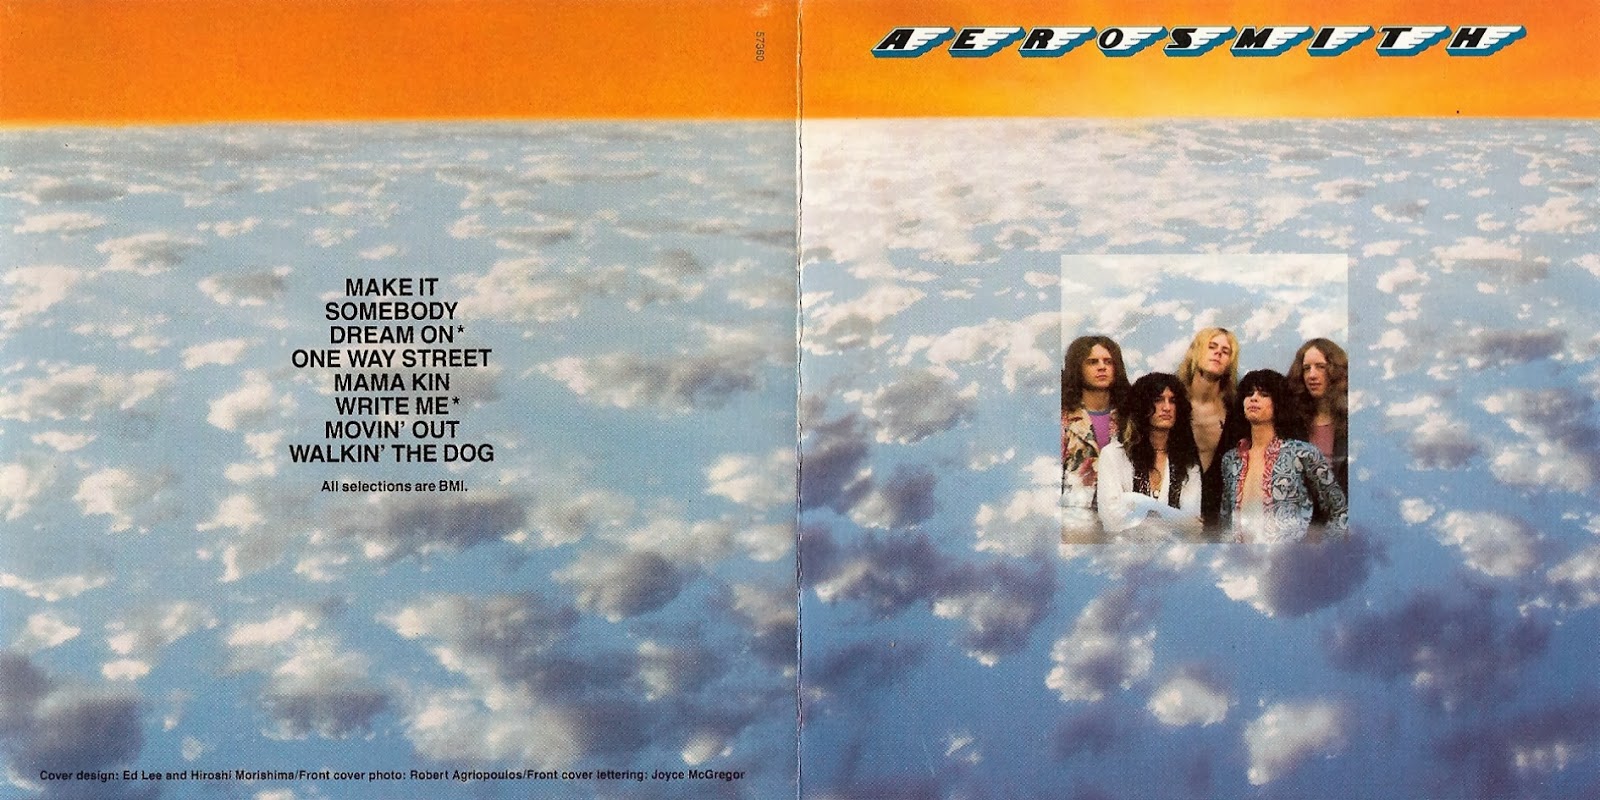 Включи dream on. Aerosmith 1973 album. Обложки Aerosmith 1973. Aerosmith 1973 обложка CD. Aerosmith - Dream on 1973.